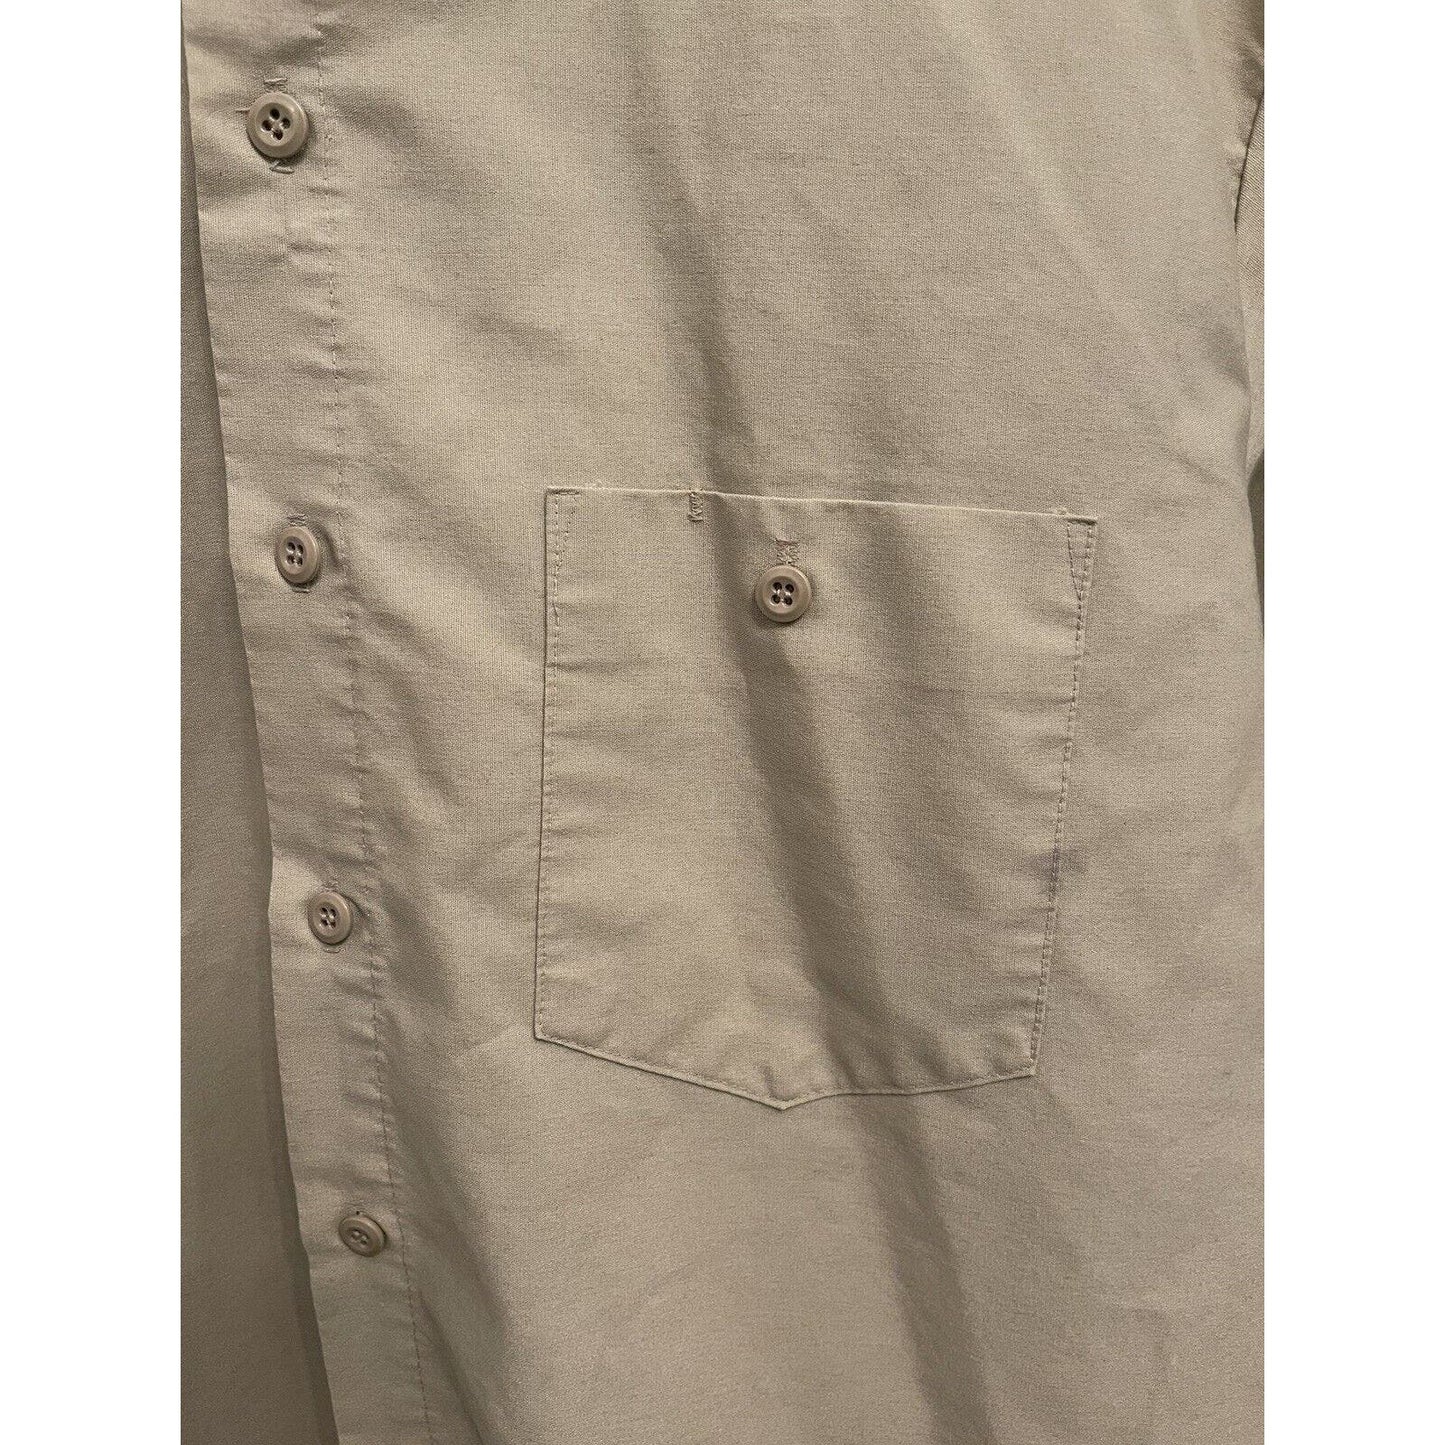 Red Kap Men’s Short Sleeve Industrial Work Shirt Size Extra Large XL